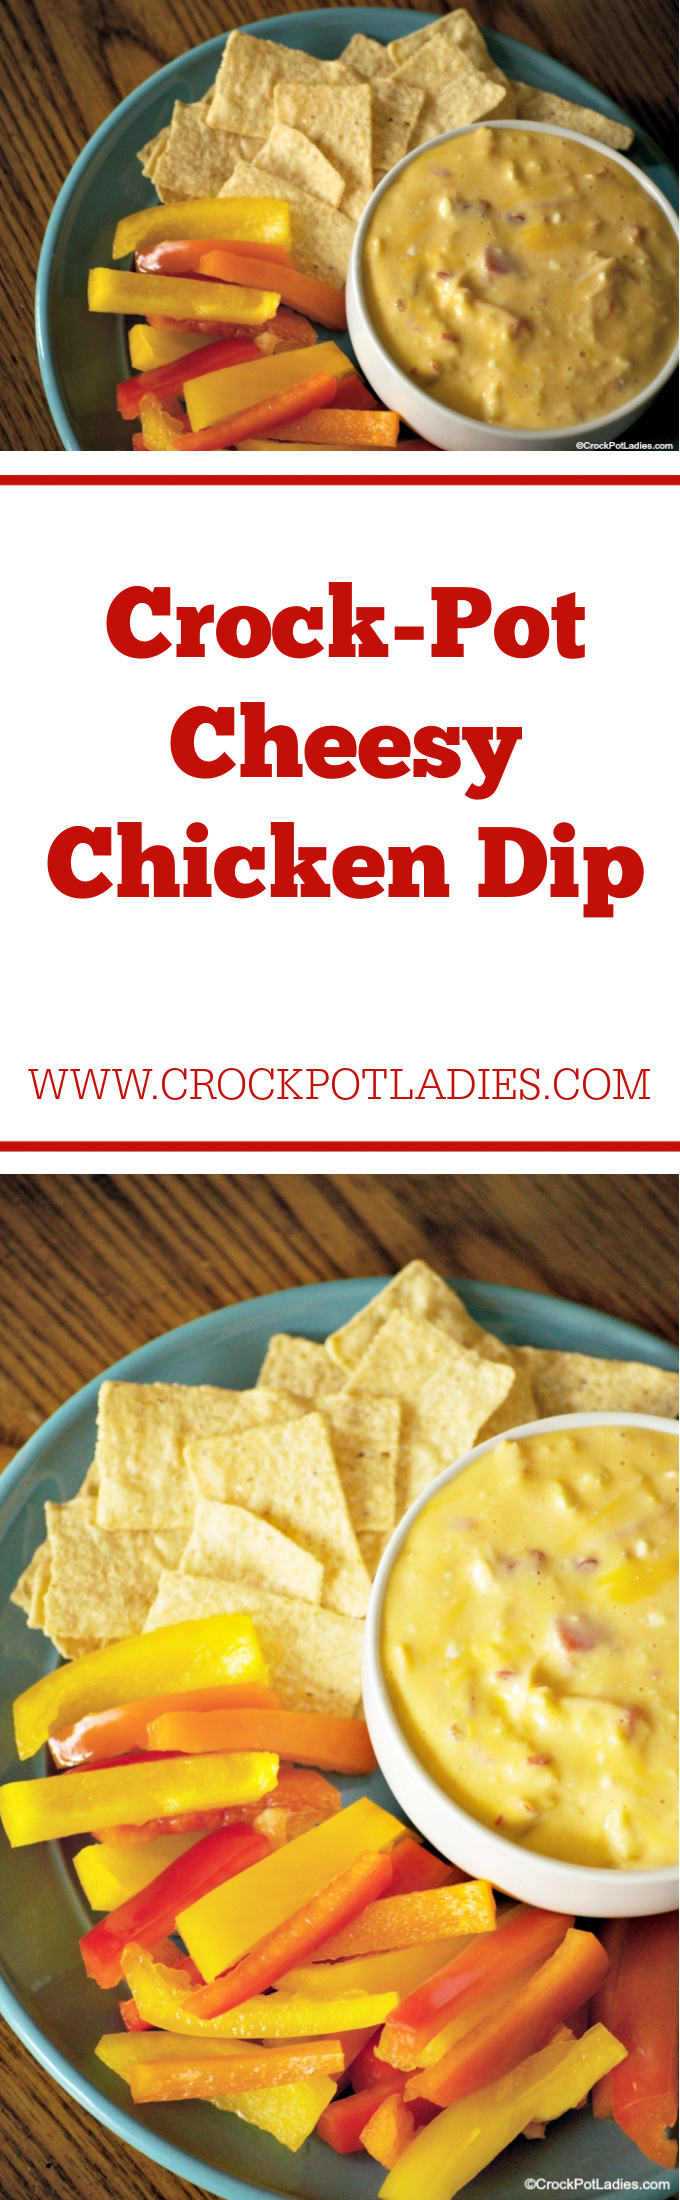 Crock-Pot Cheesy Chicken Dip